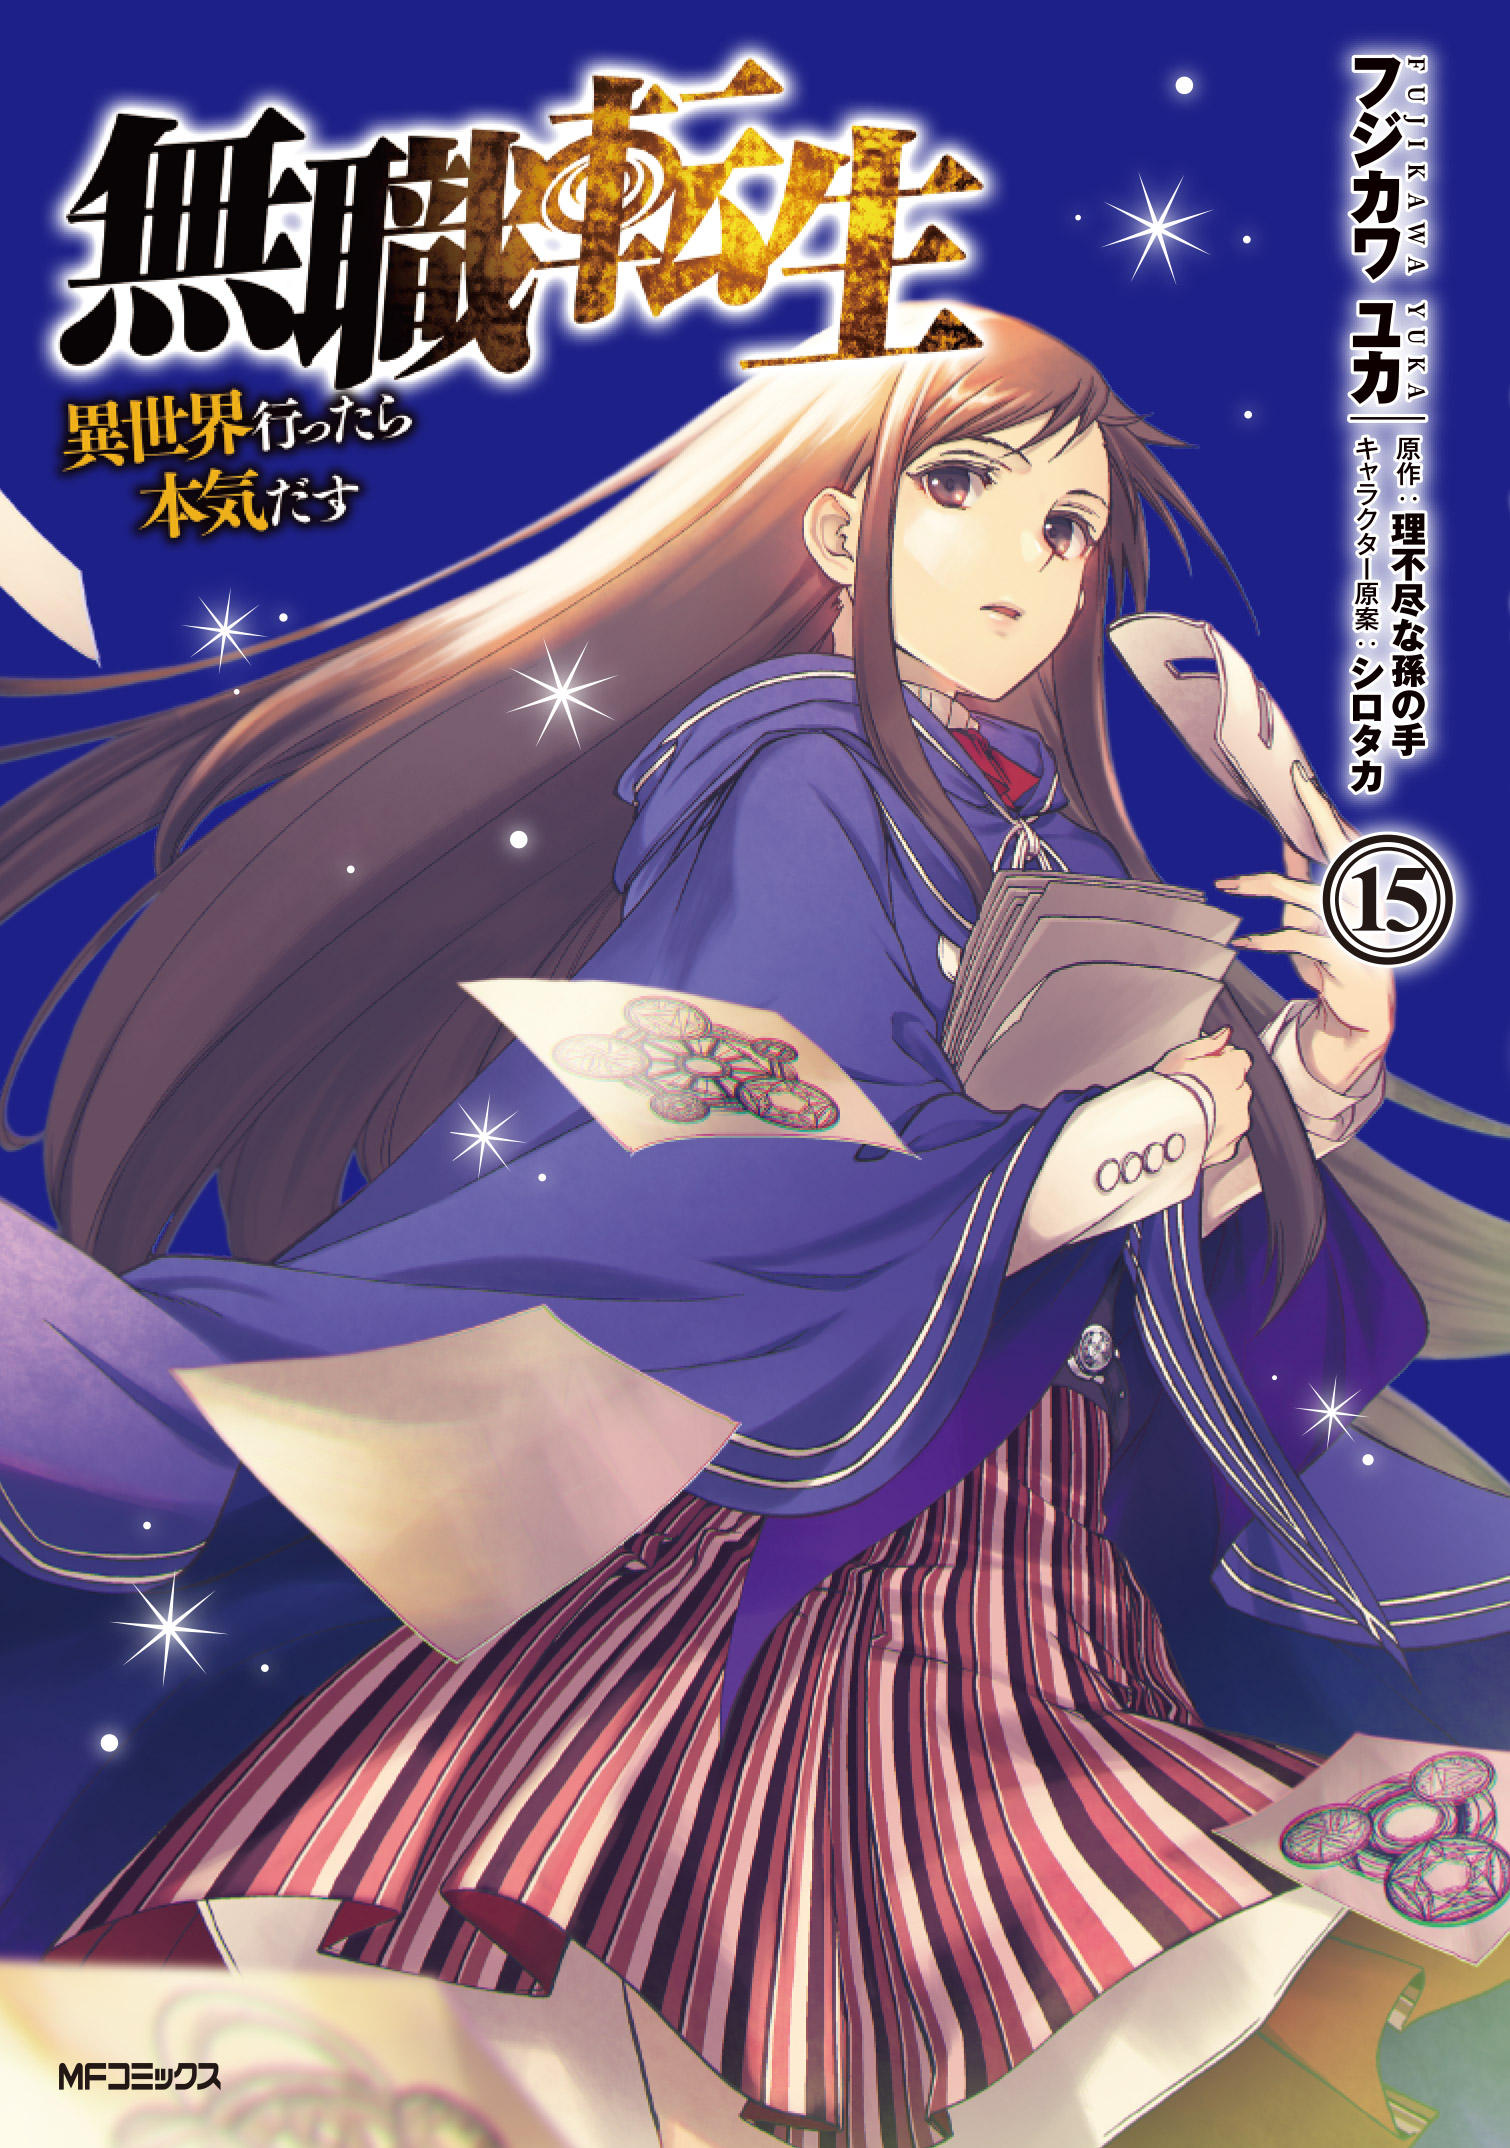 Light Novel Volume 23, Mushoku Tensei Wiki